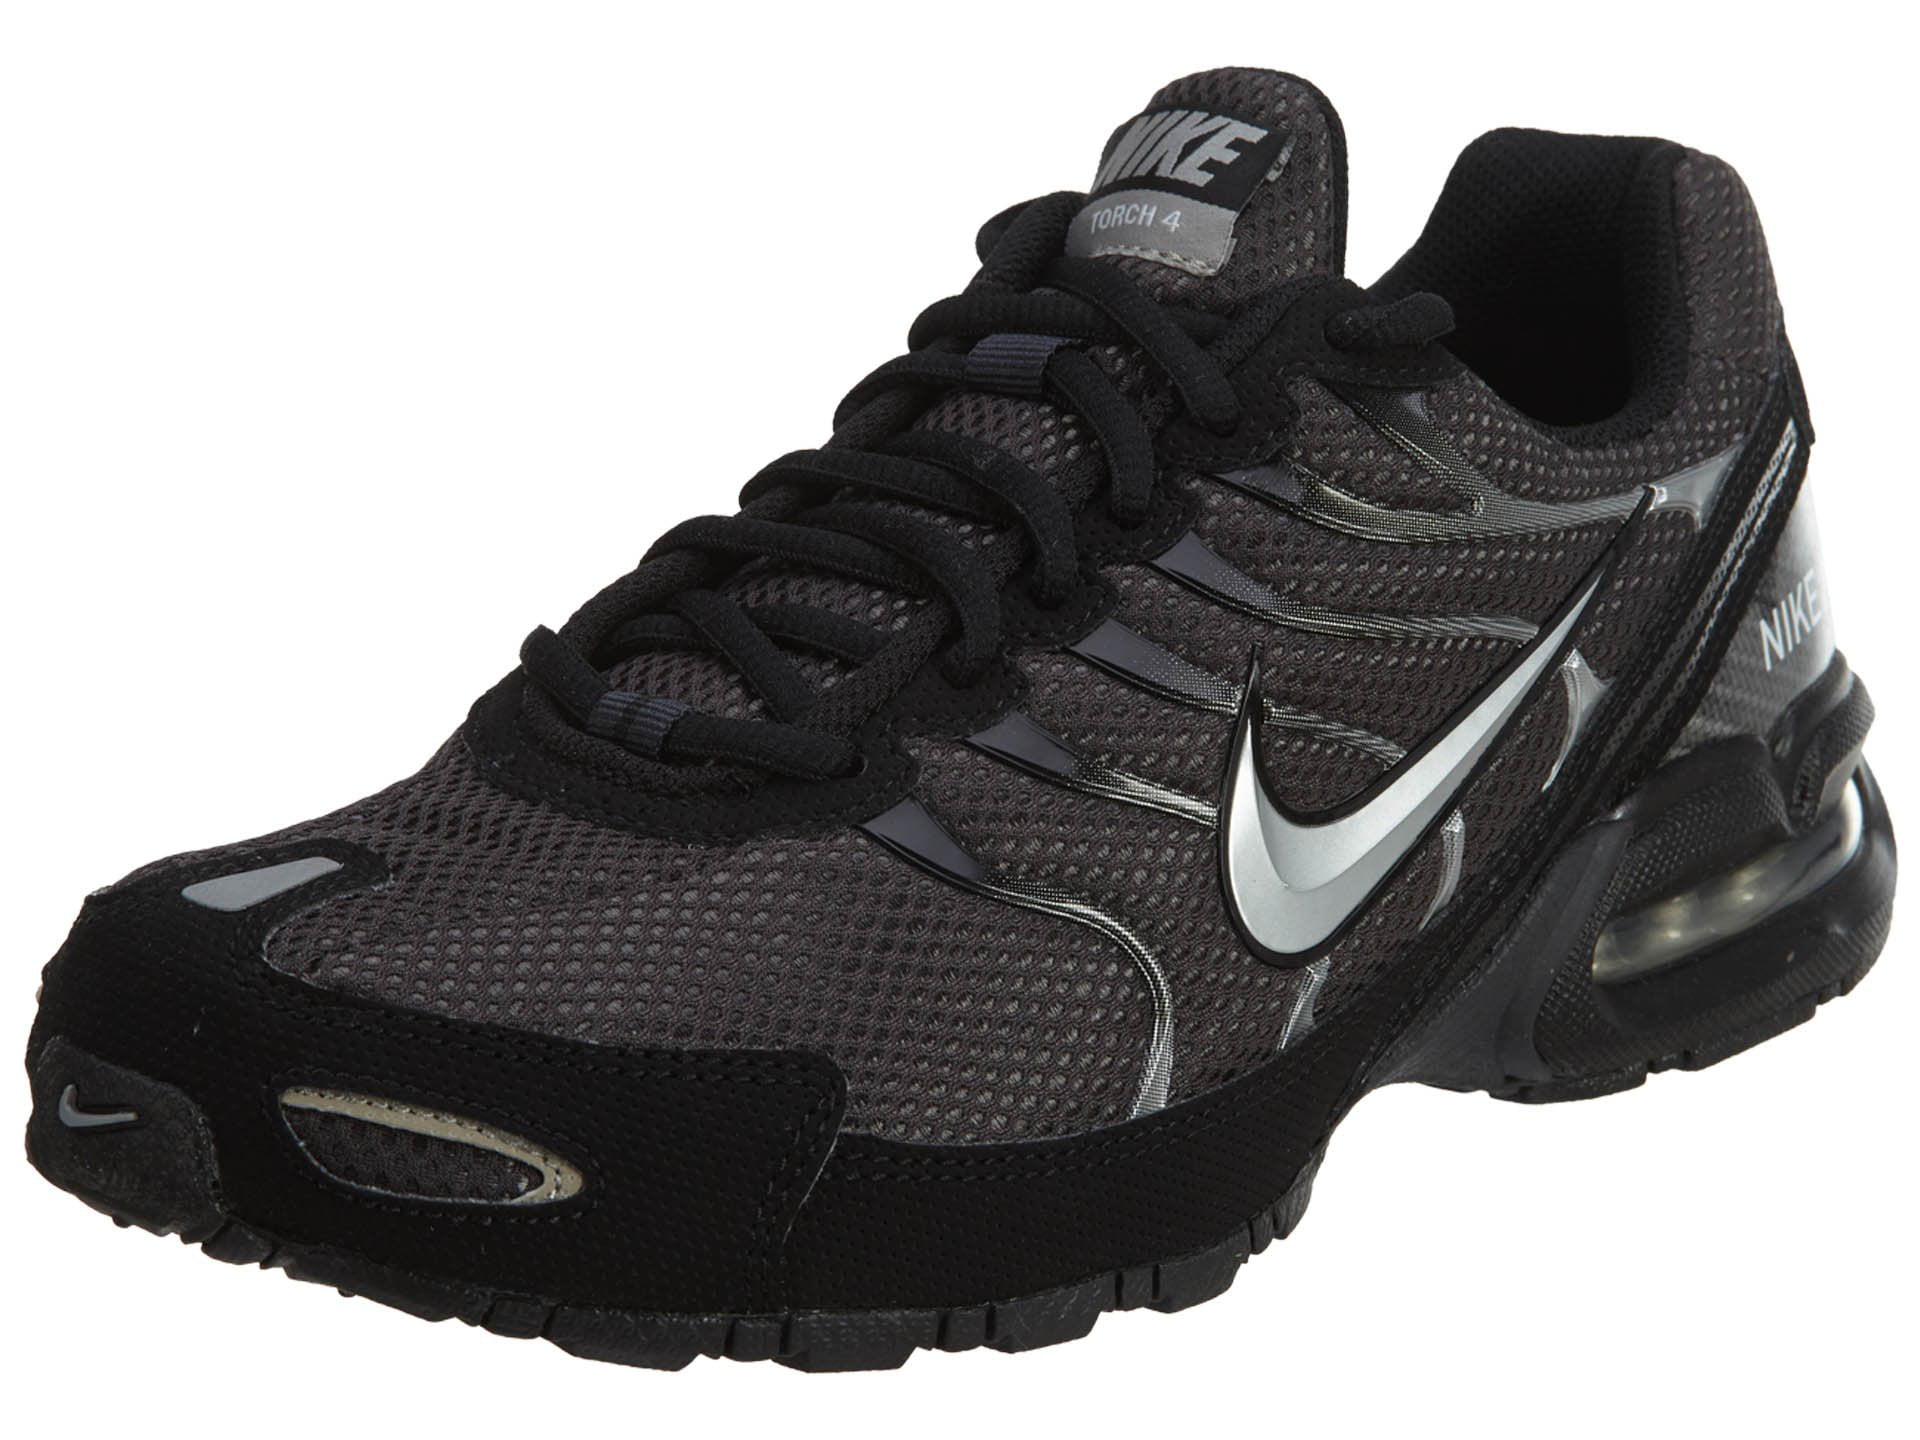 Men's Nike Air Max Torch 4 Running Shoe Anthracite/Metallic Silver